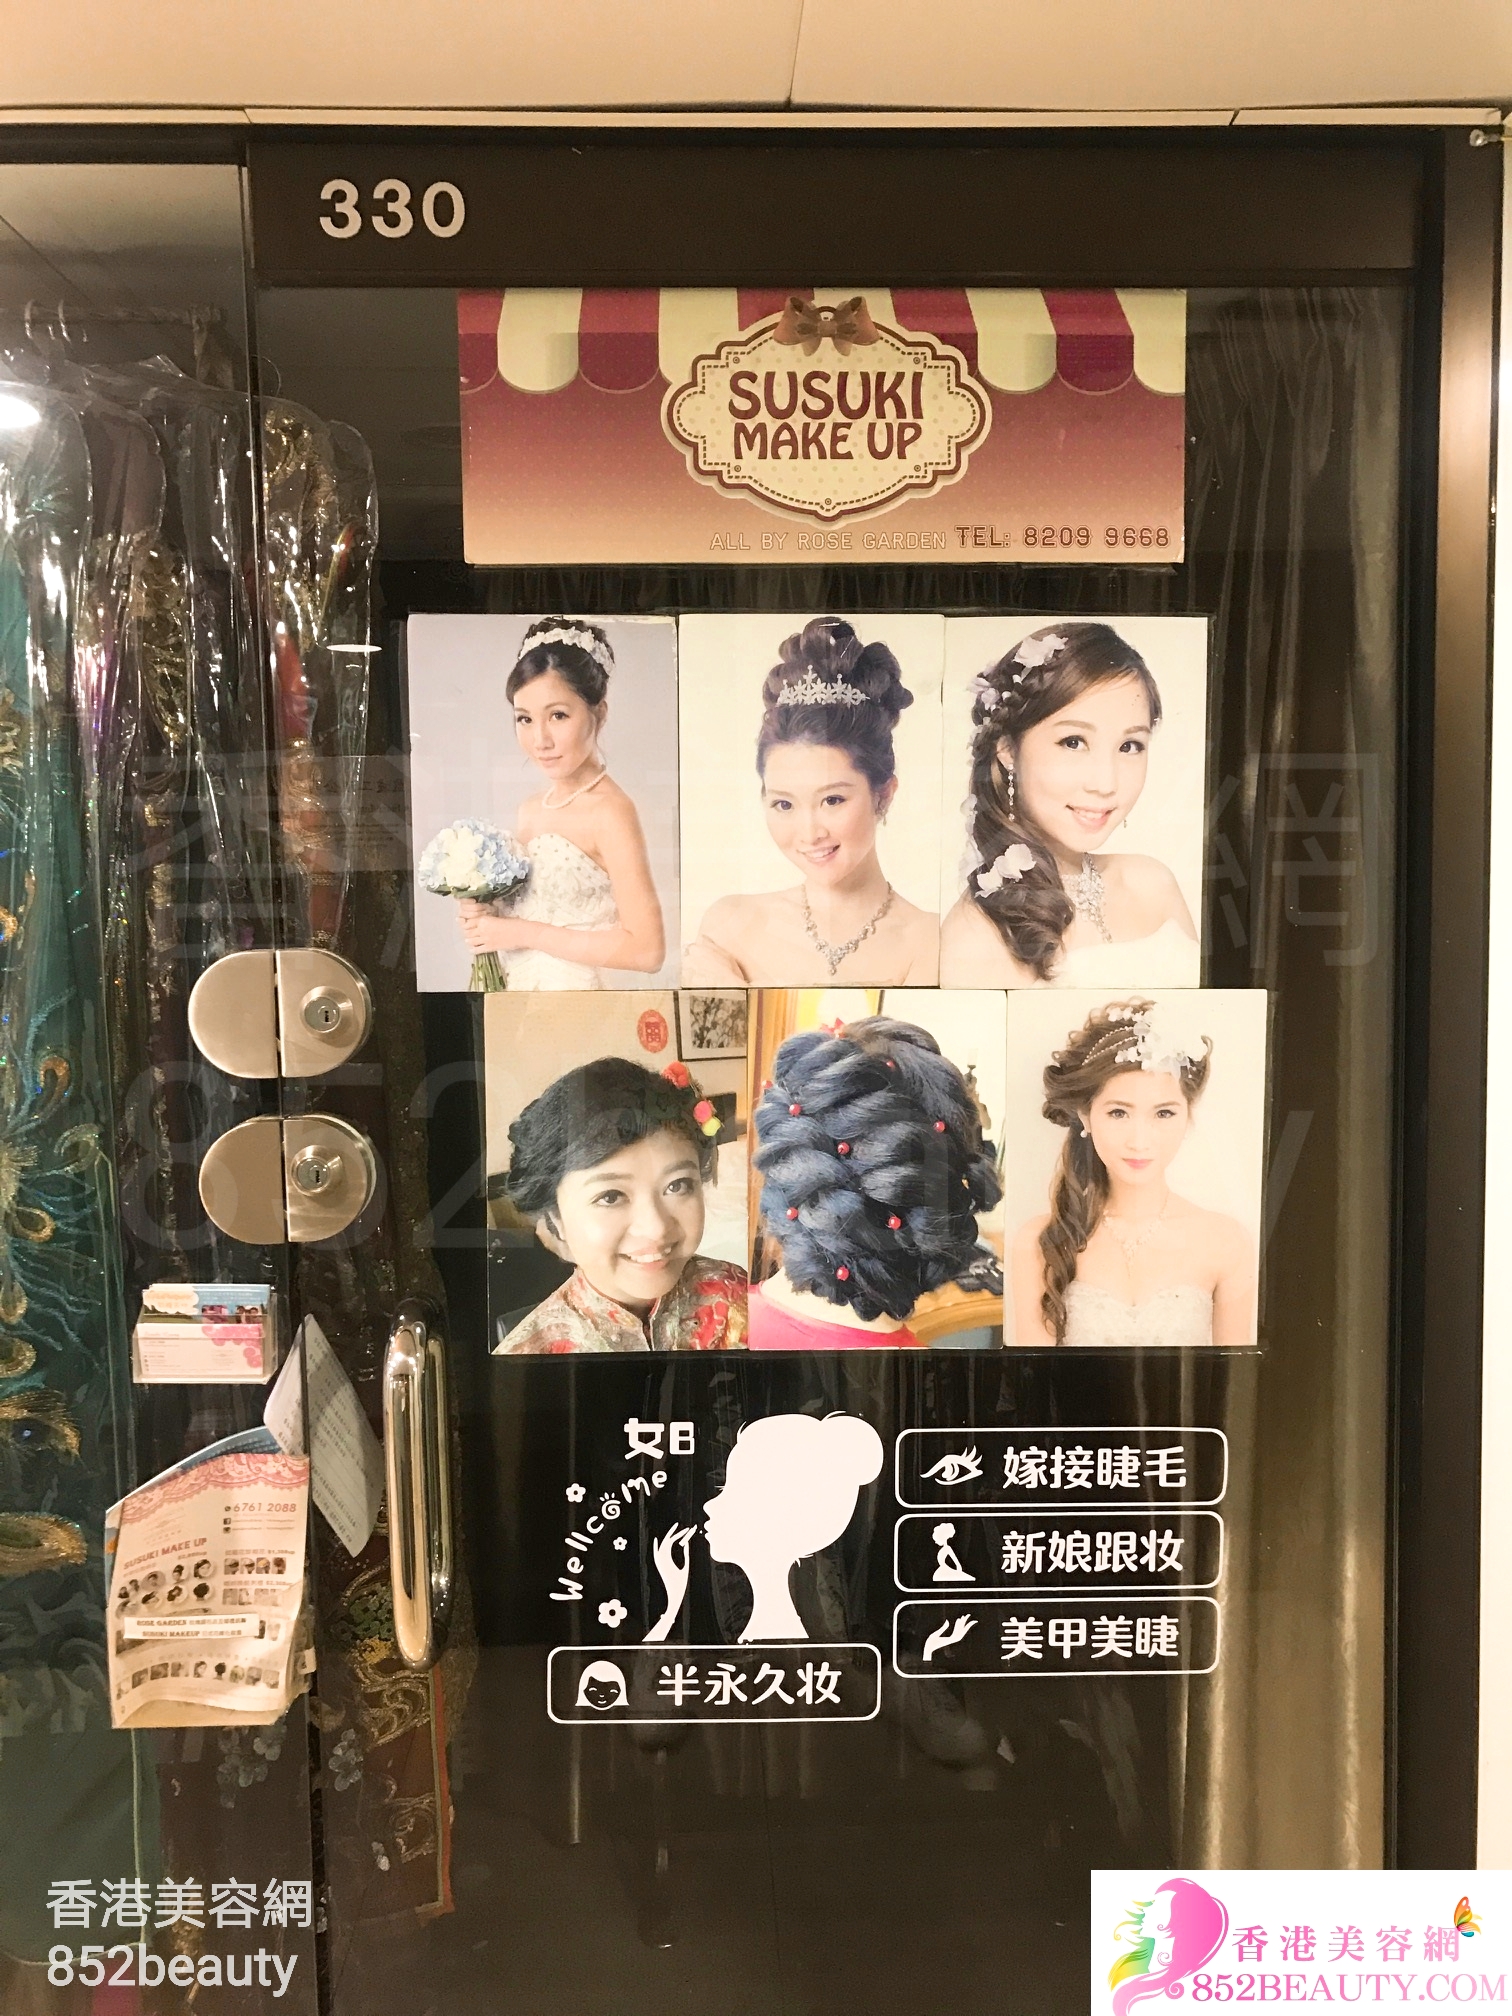 香港美容網 Hong Kong Beauty Salon 美容院 / 美容師: SUSUKI MAKE UP